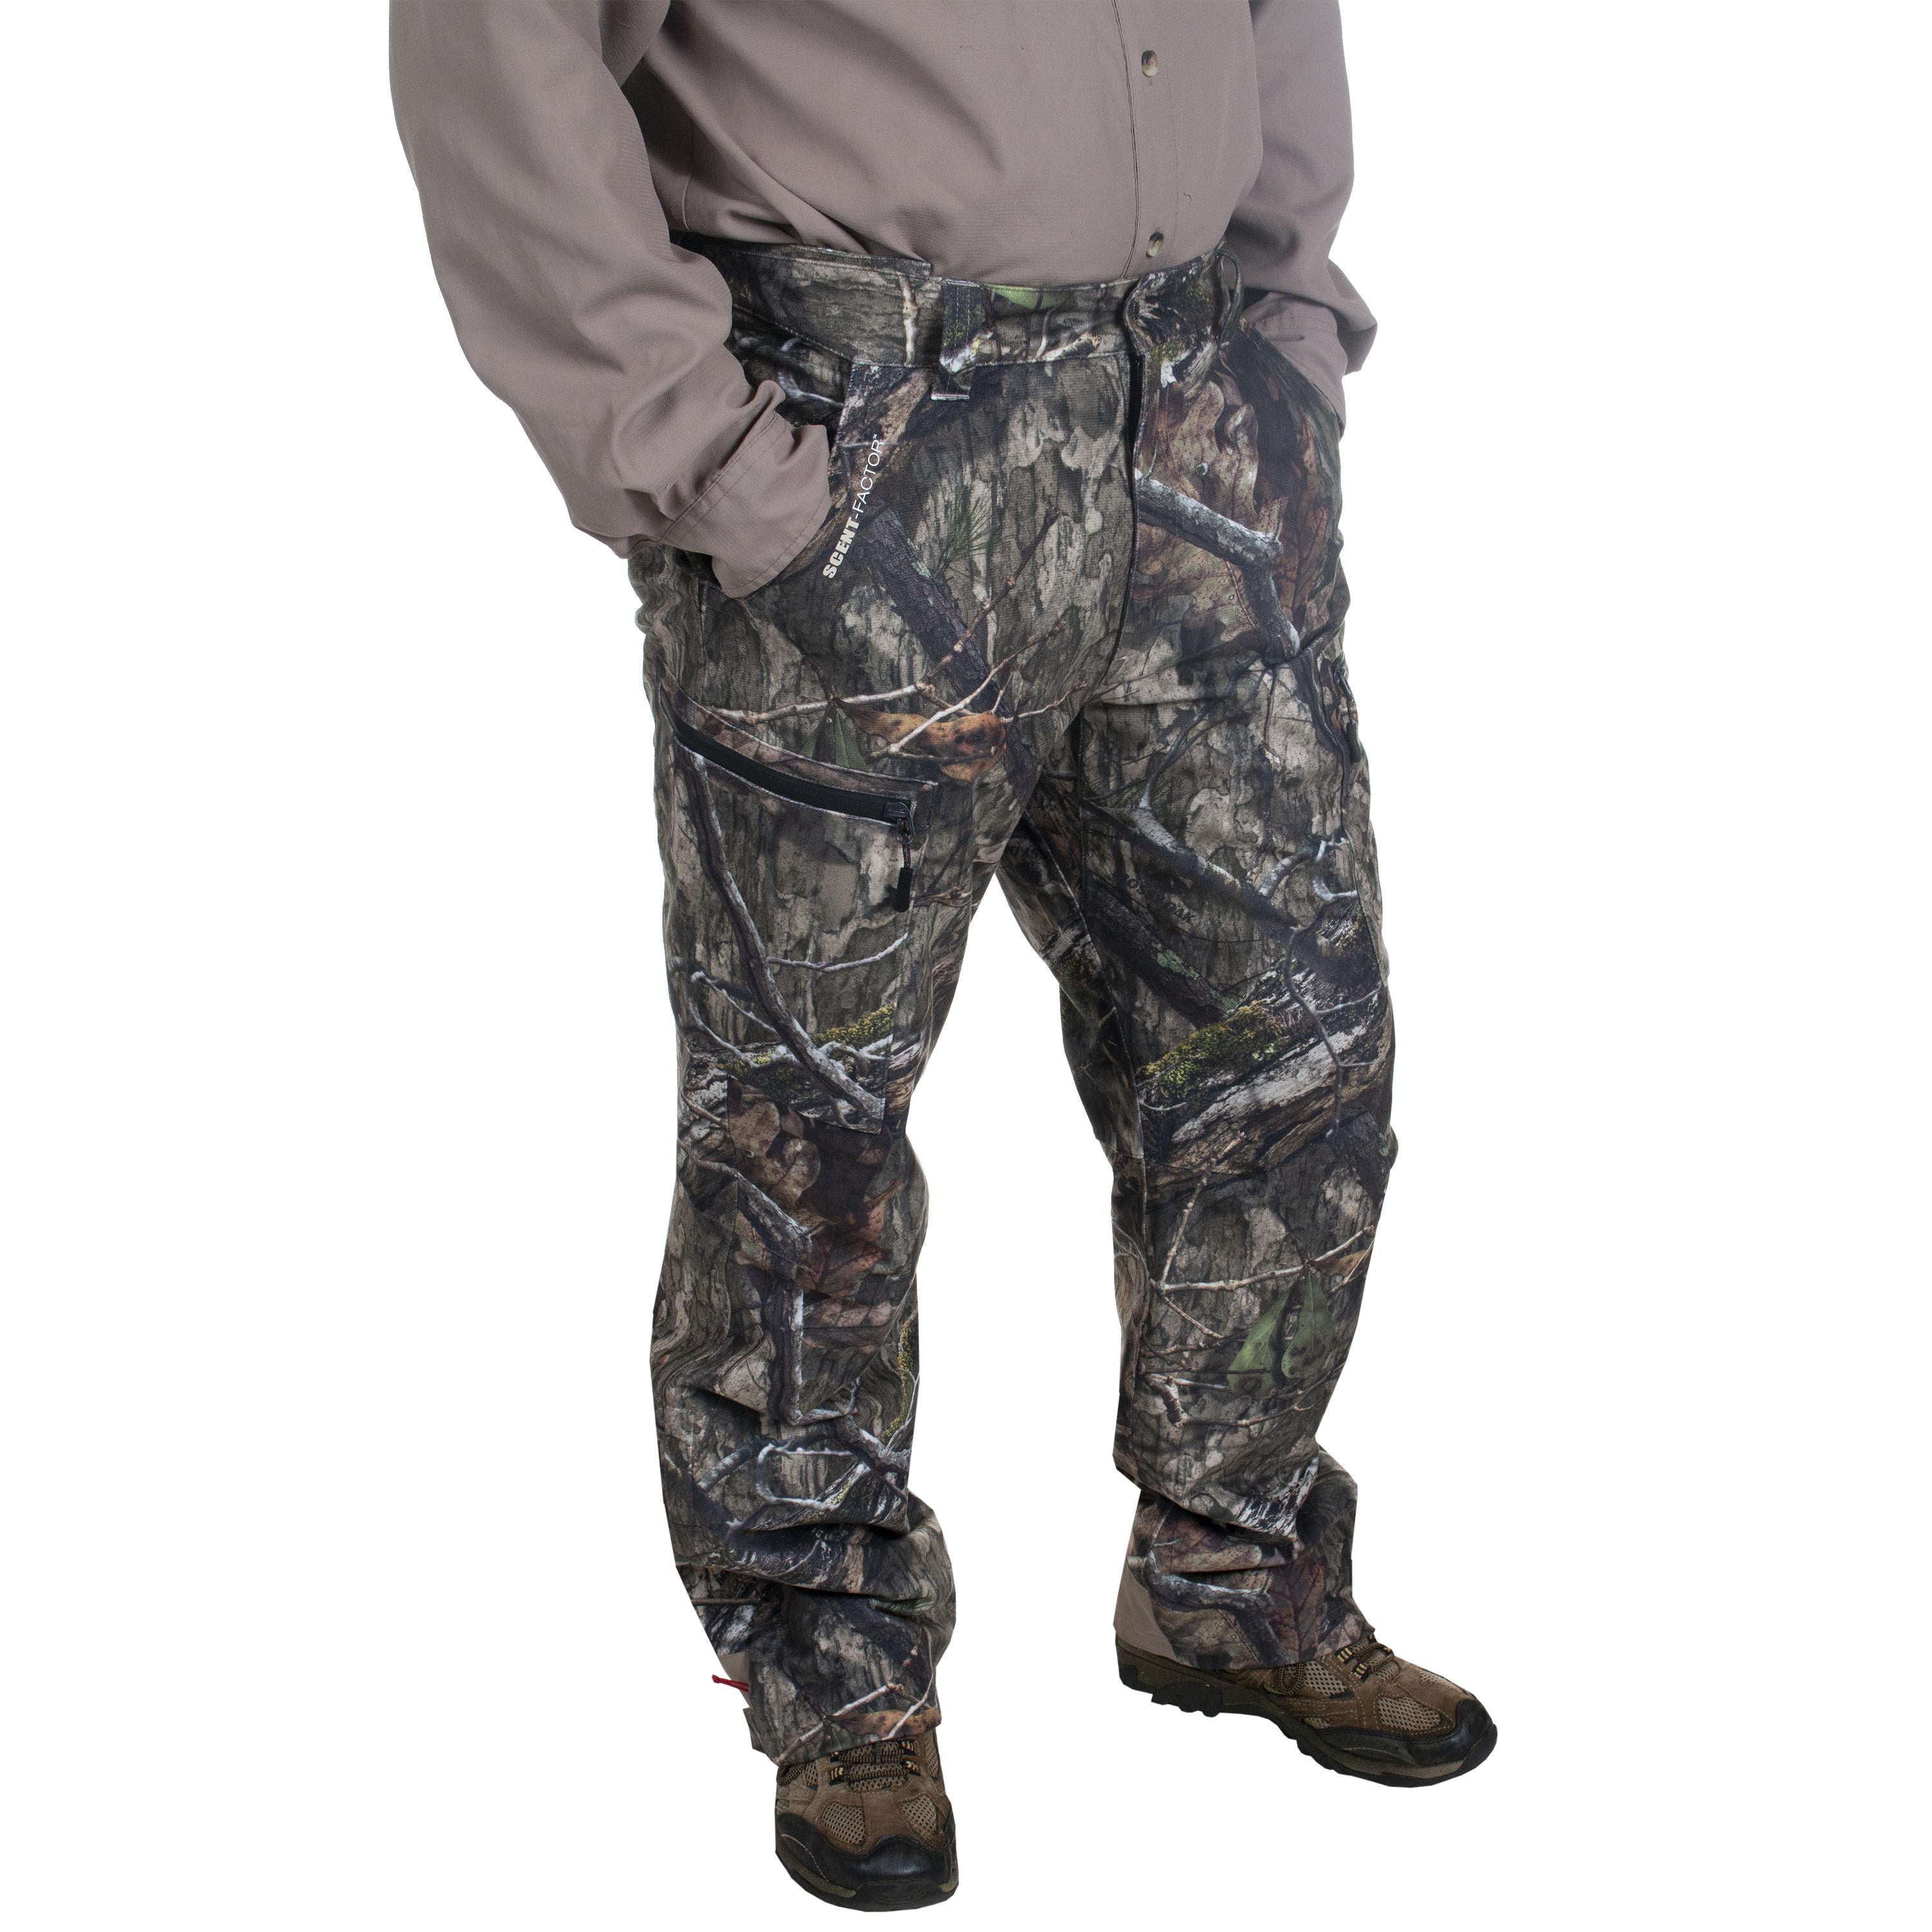 BANDED Hunting Pants for sale | eBay